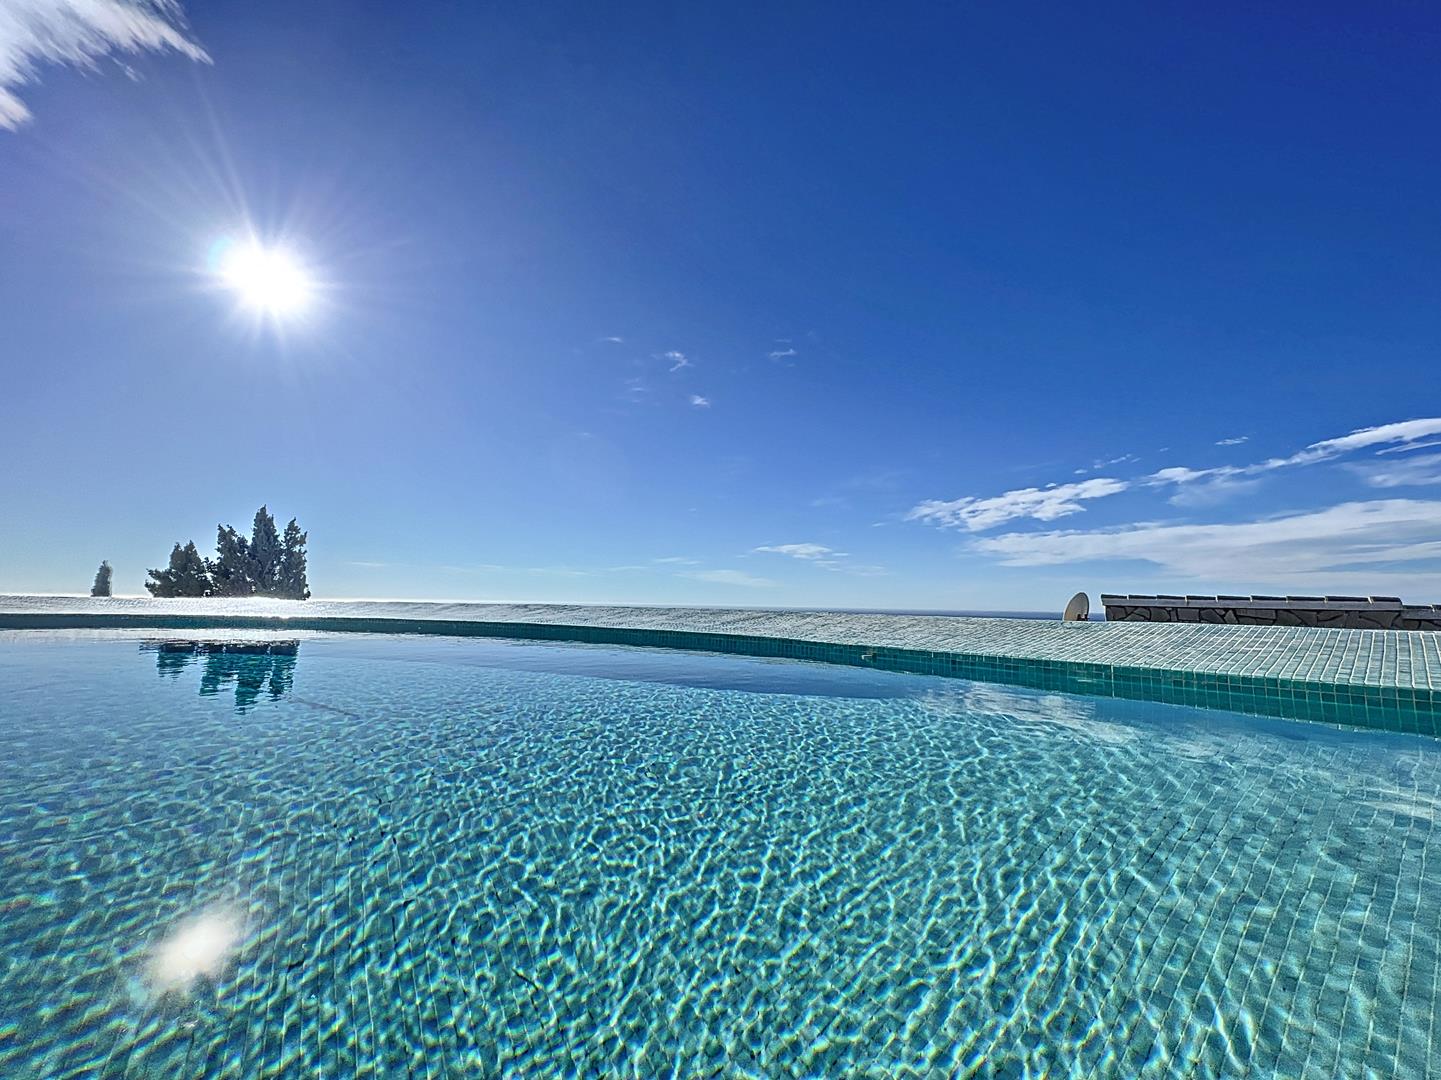 Villa mit Meerblick und privatem Pool